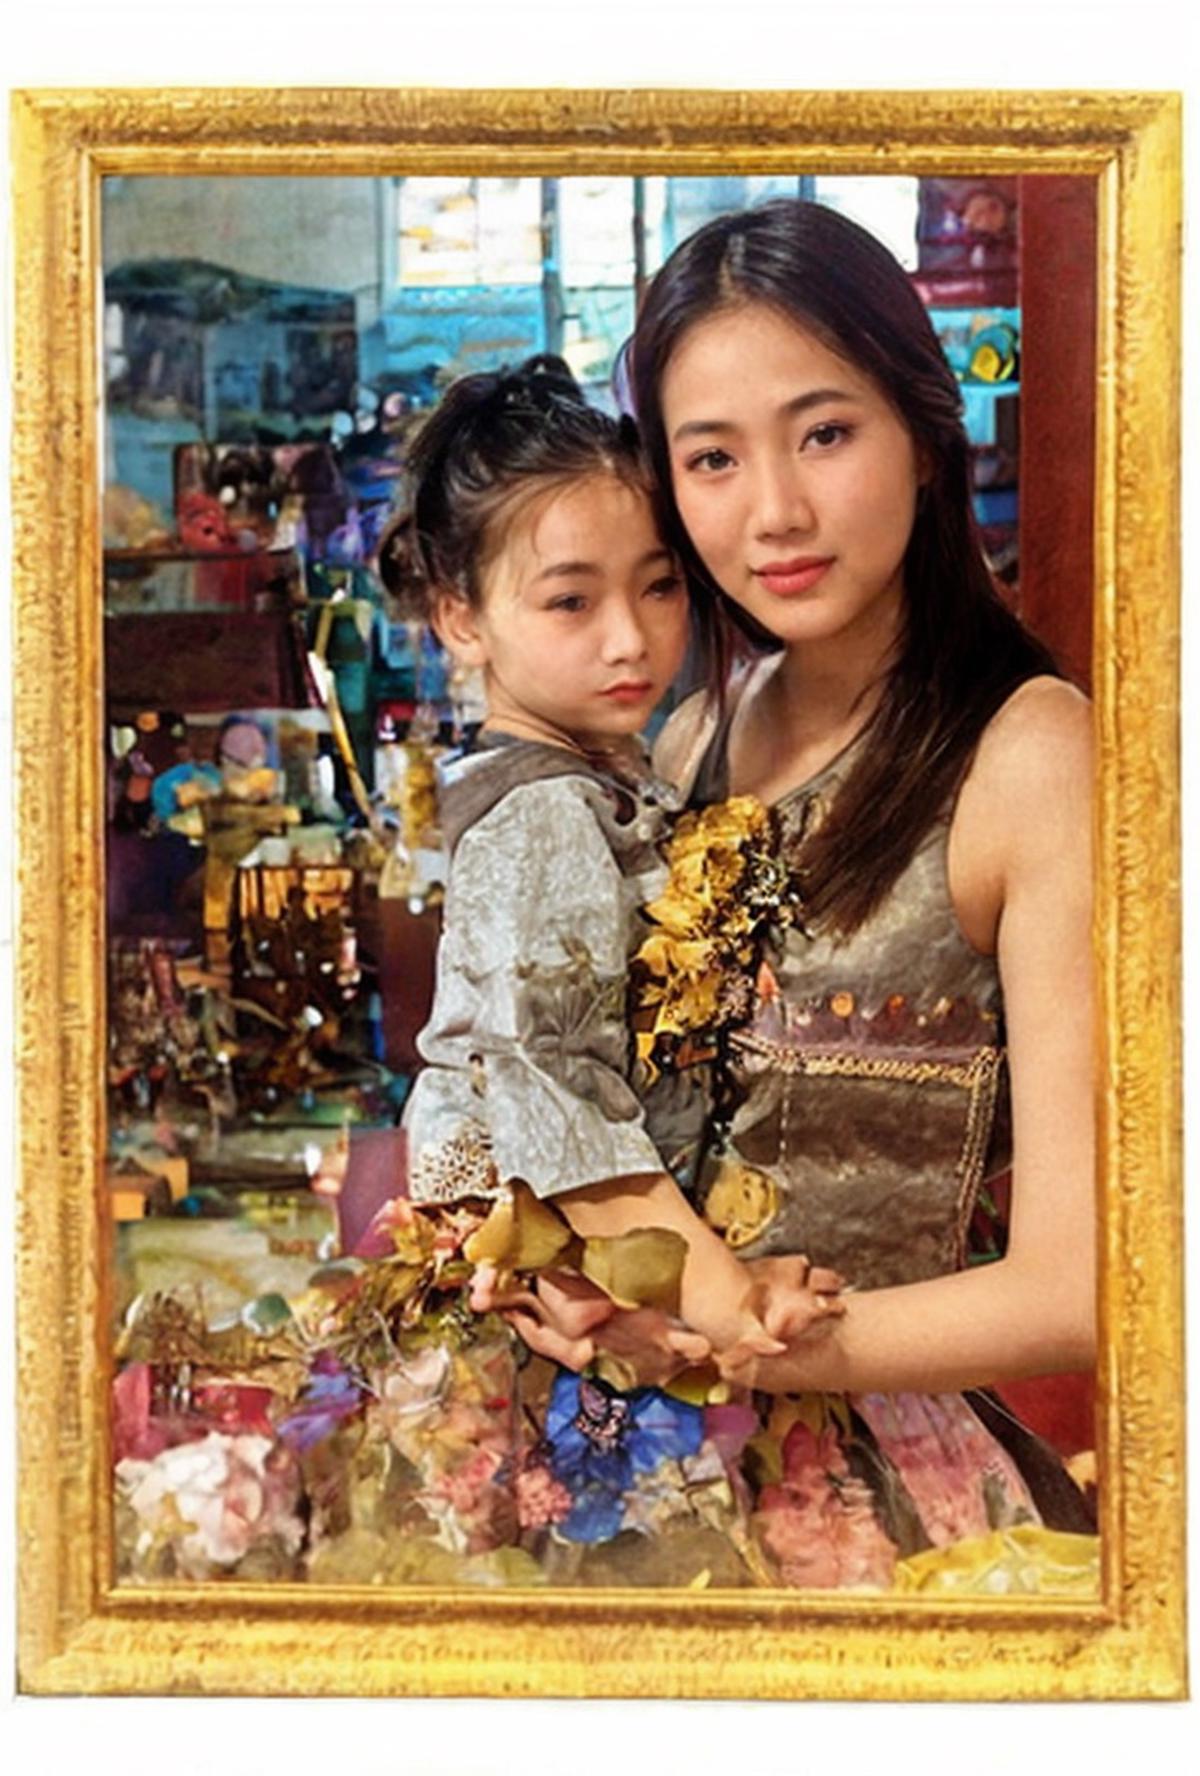 Thai Poster vintage image by ct44mr2